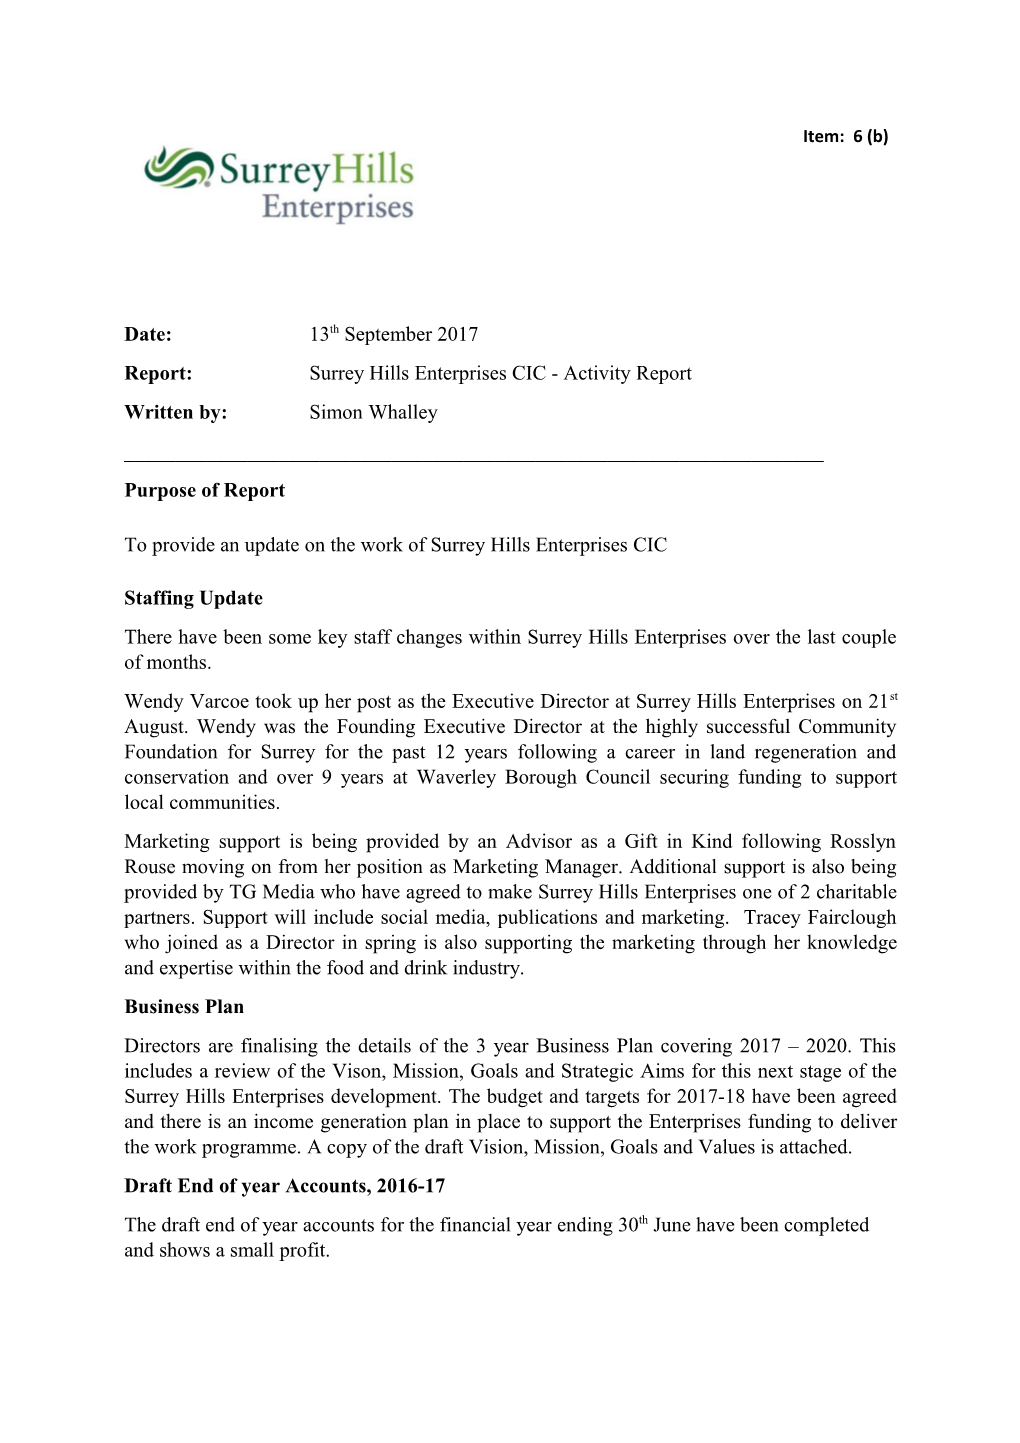 Report:Surrey Hills Enterprises CIC - Activity Report